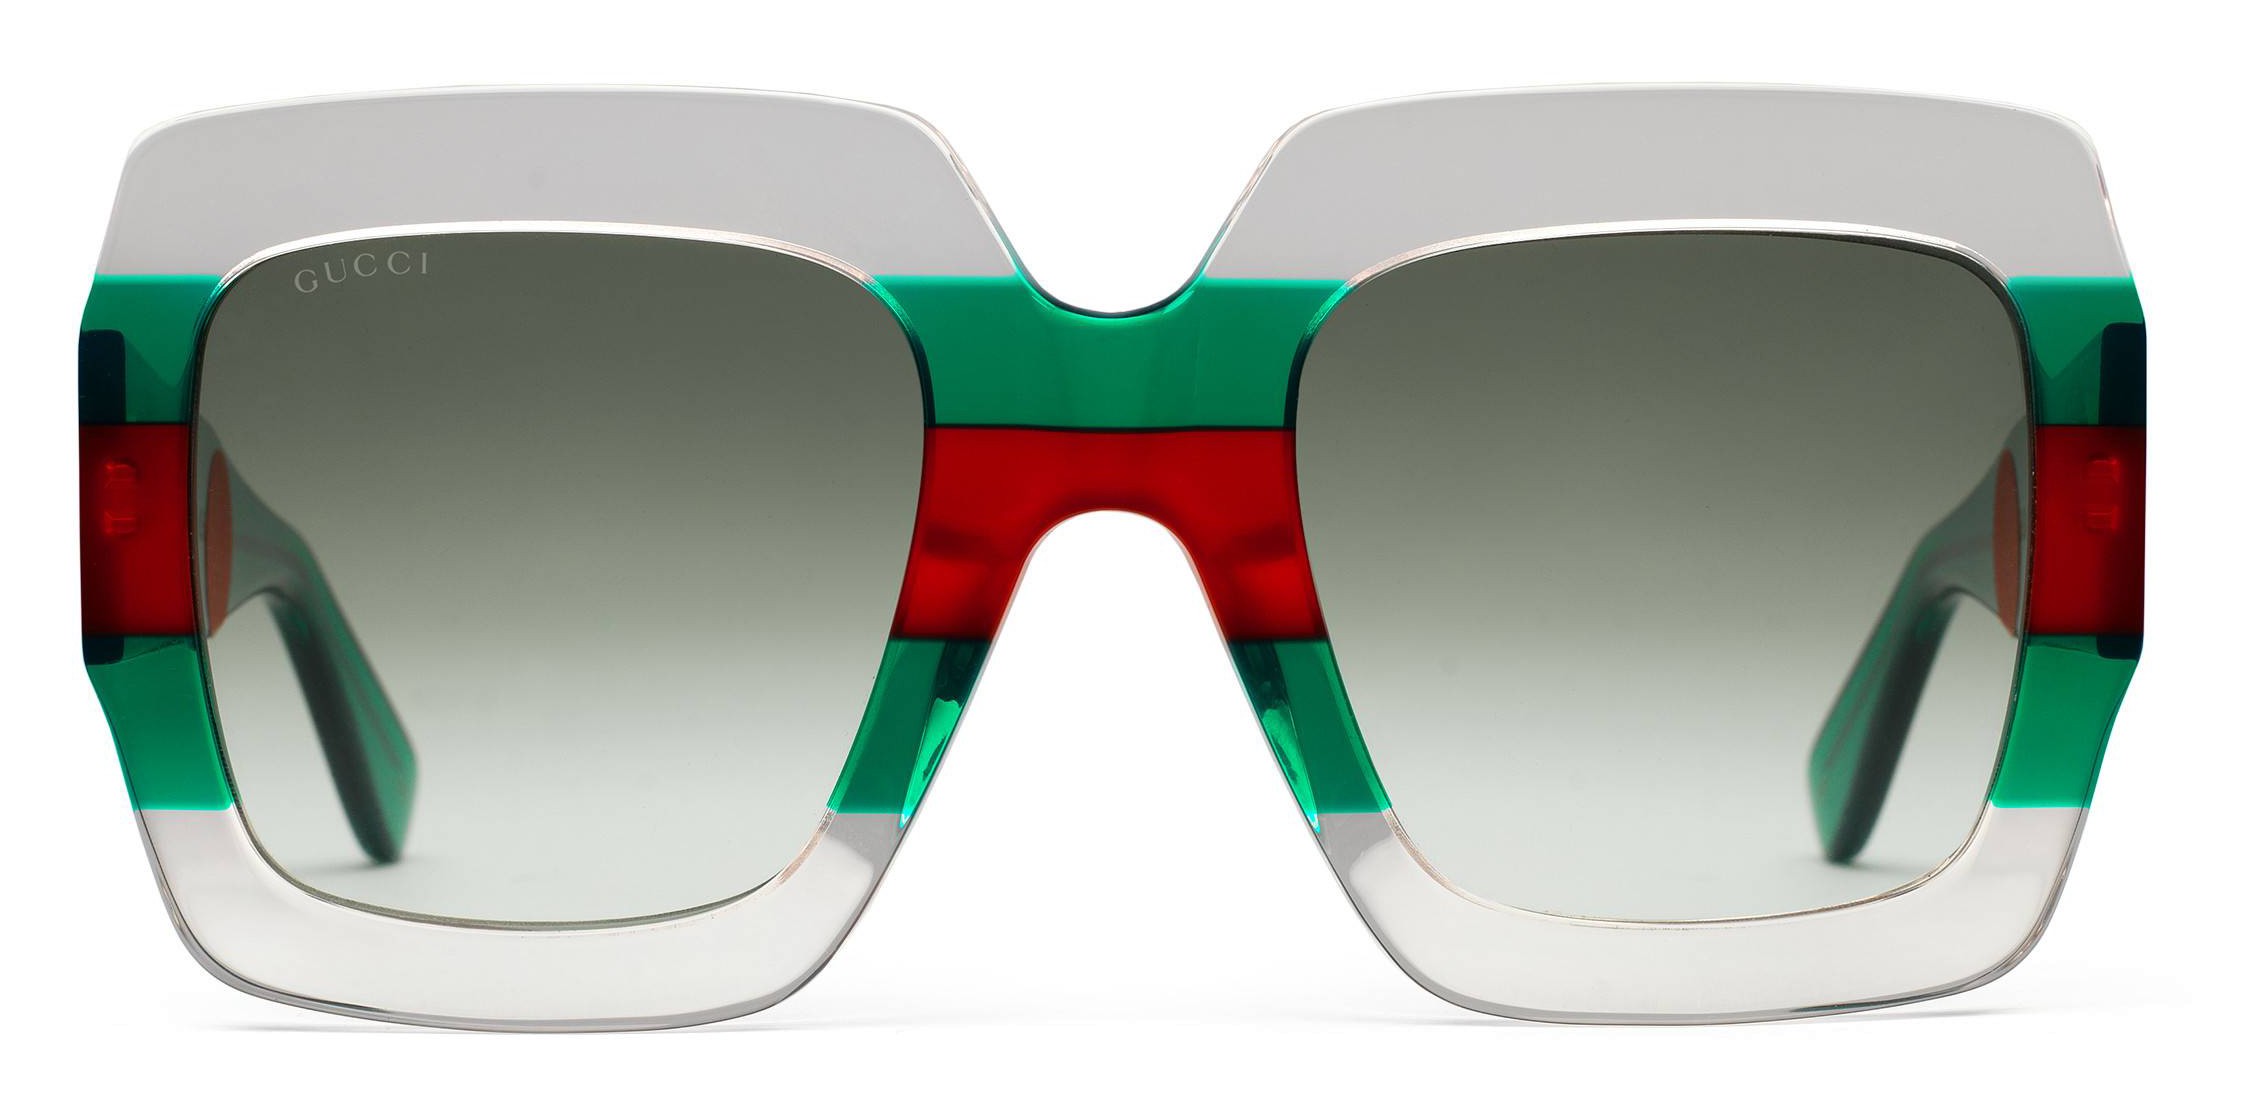 Green Red Gucci Sunglasses  Versace Lime Green Sunglasses - Brand Square  Sunglasses - Aliexpress